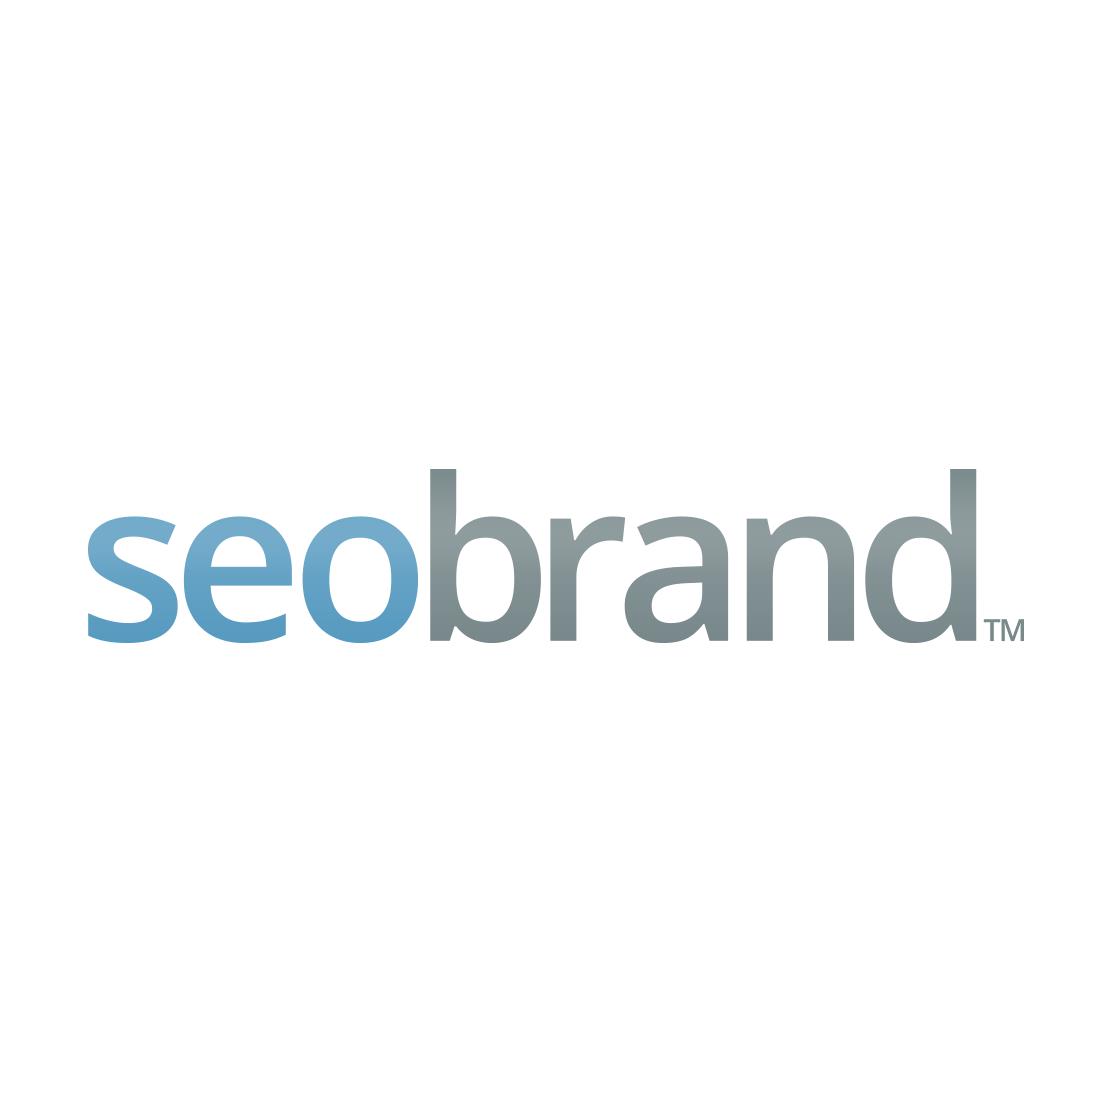 Top New York SEO Company Logo: SEO Brand